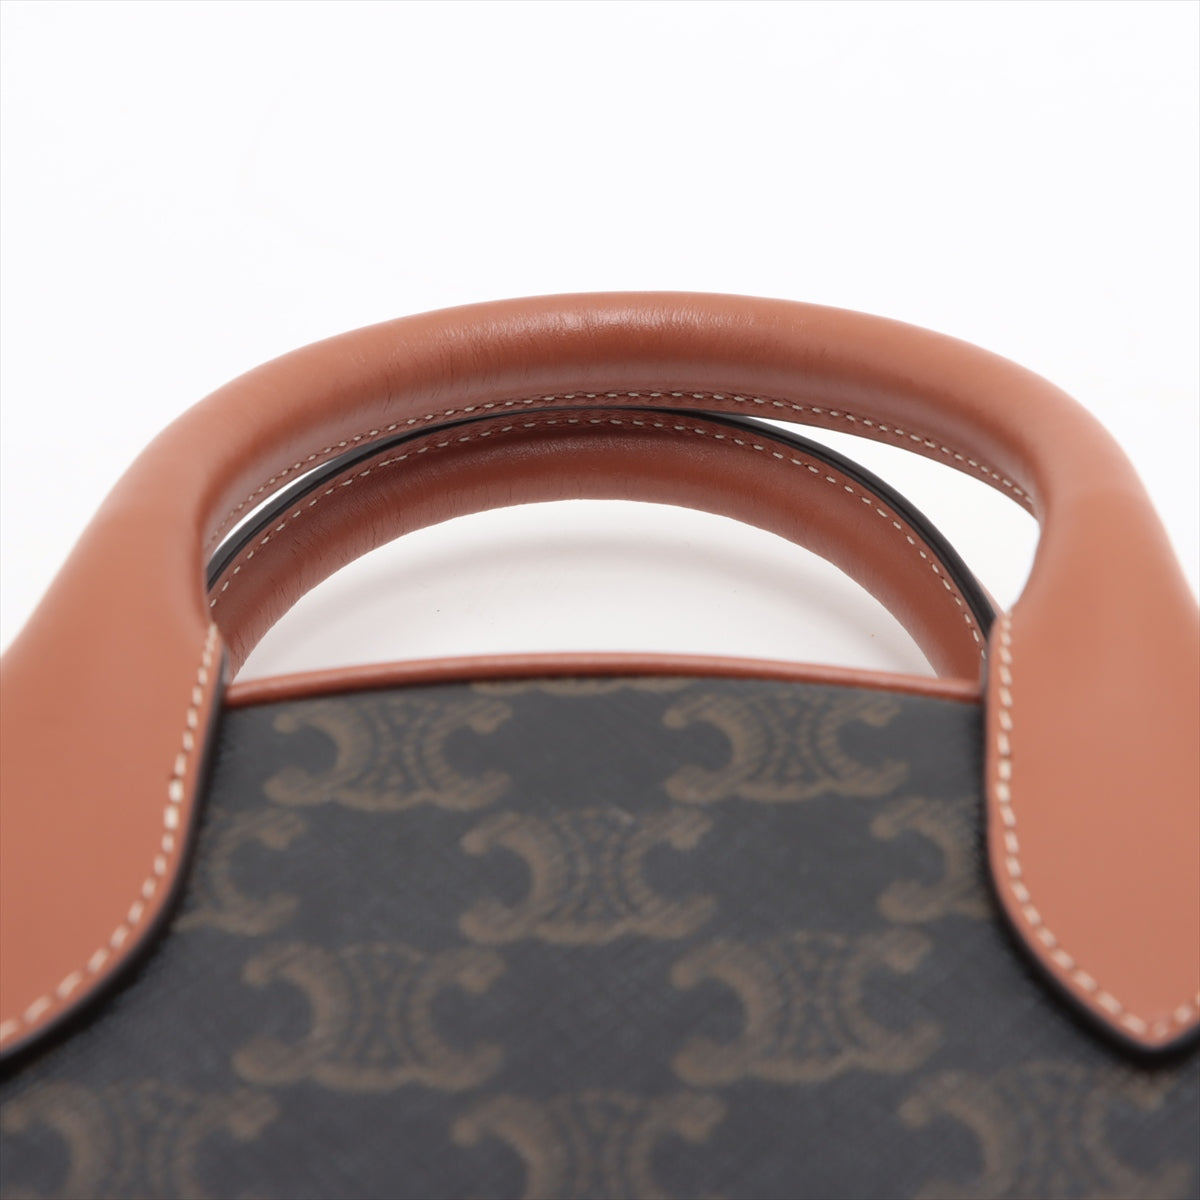 Celine f Bowling Bag PVC Leather 2WAY Handbag Brown